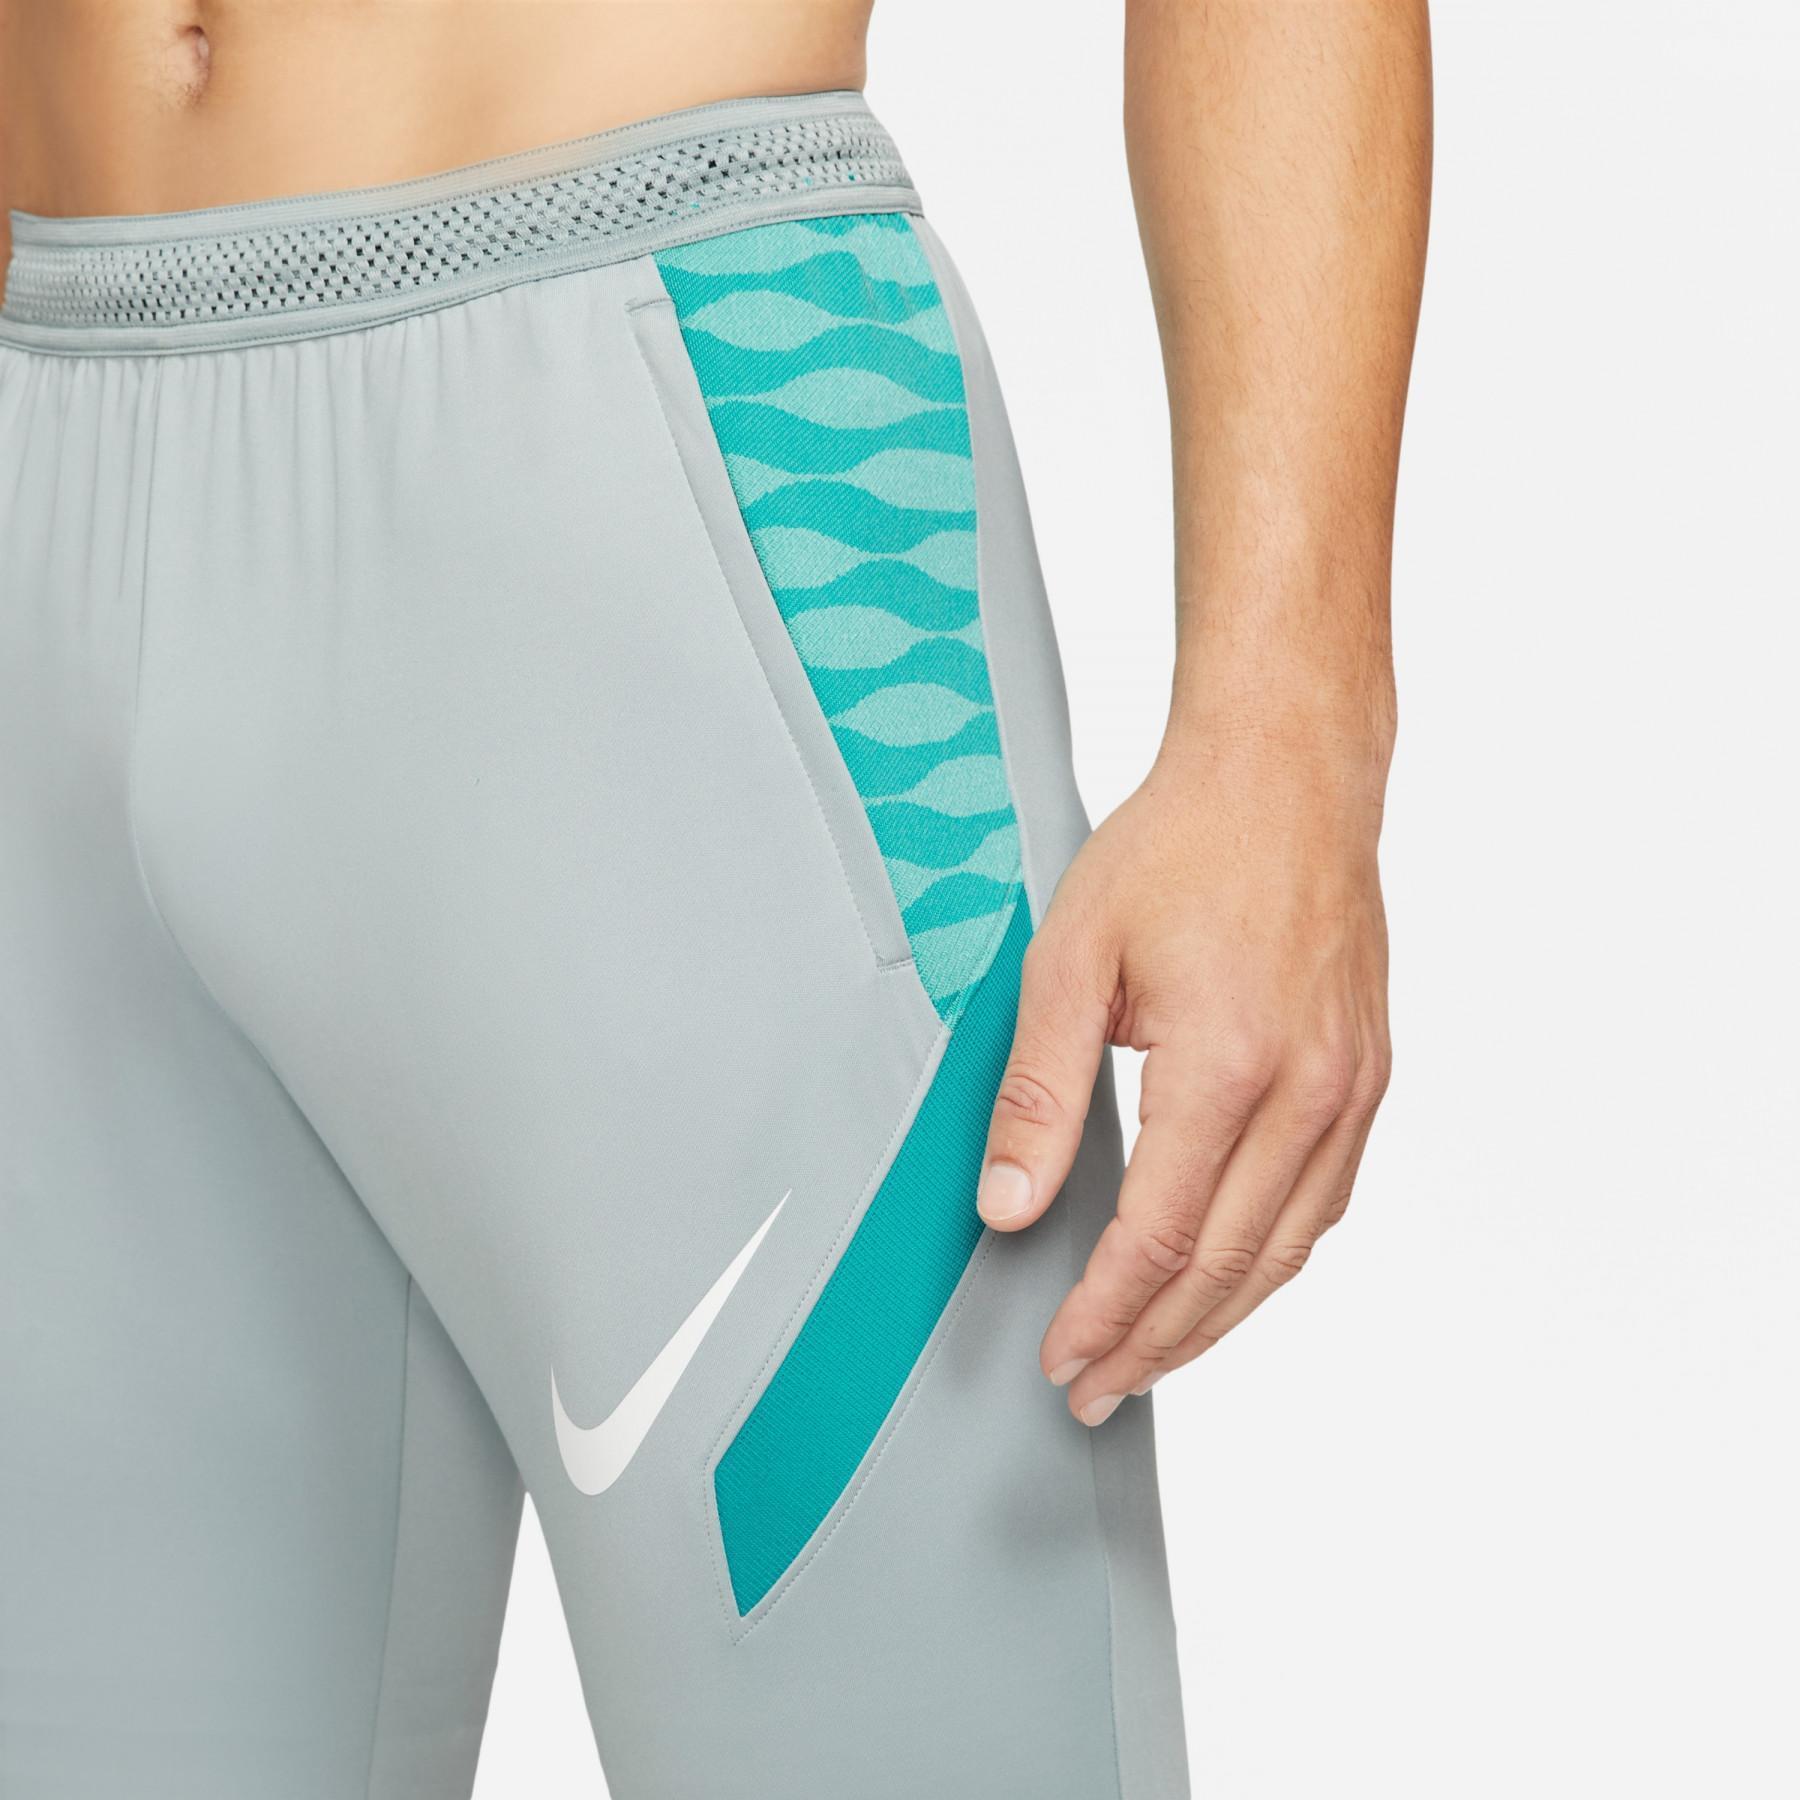 Pantaloni Nike Dri-FIT Strike